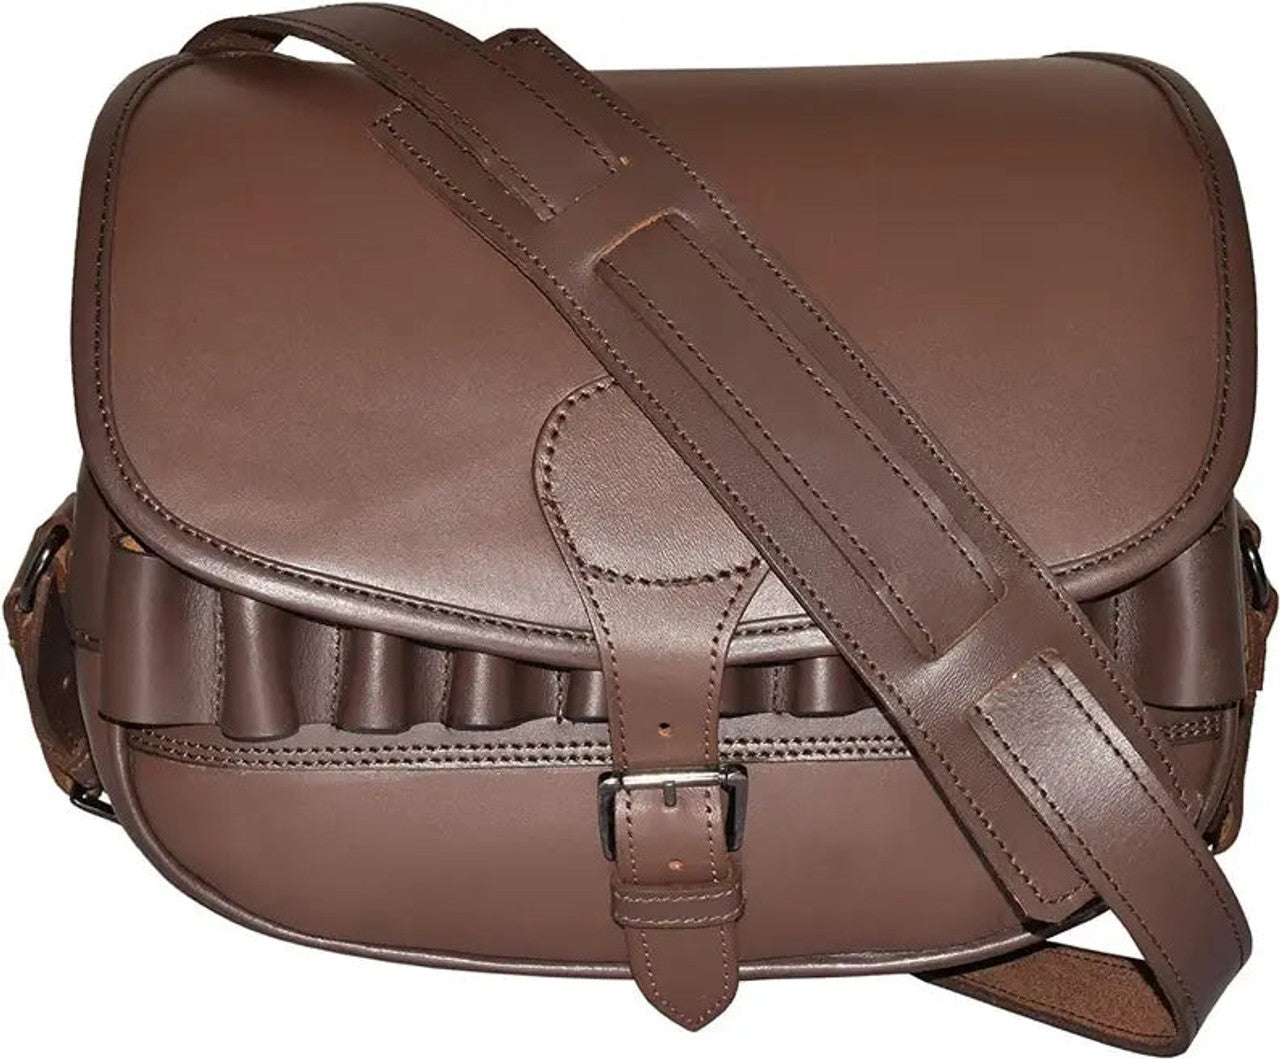 bag,leather bag,leather ammo bag,cartridge bag,genuine leather bag